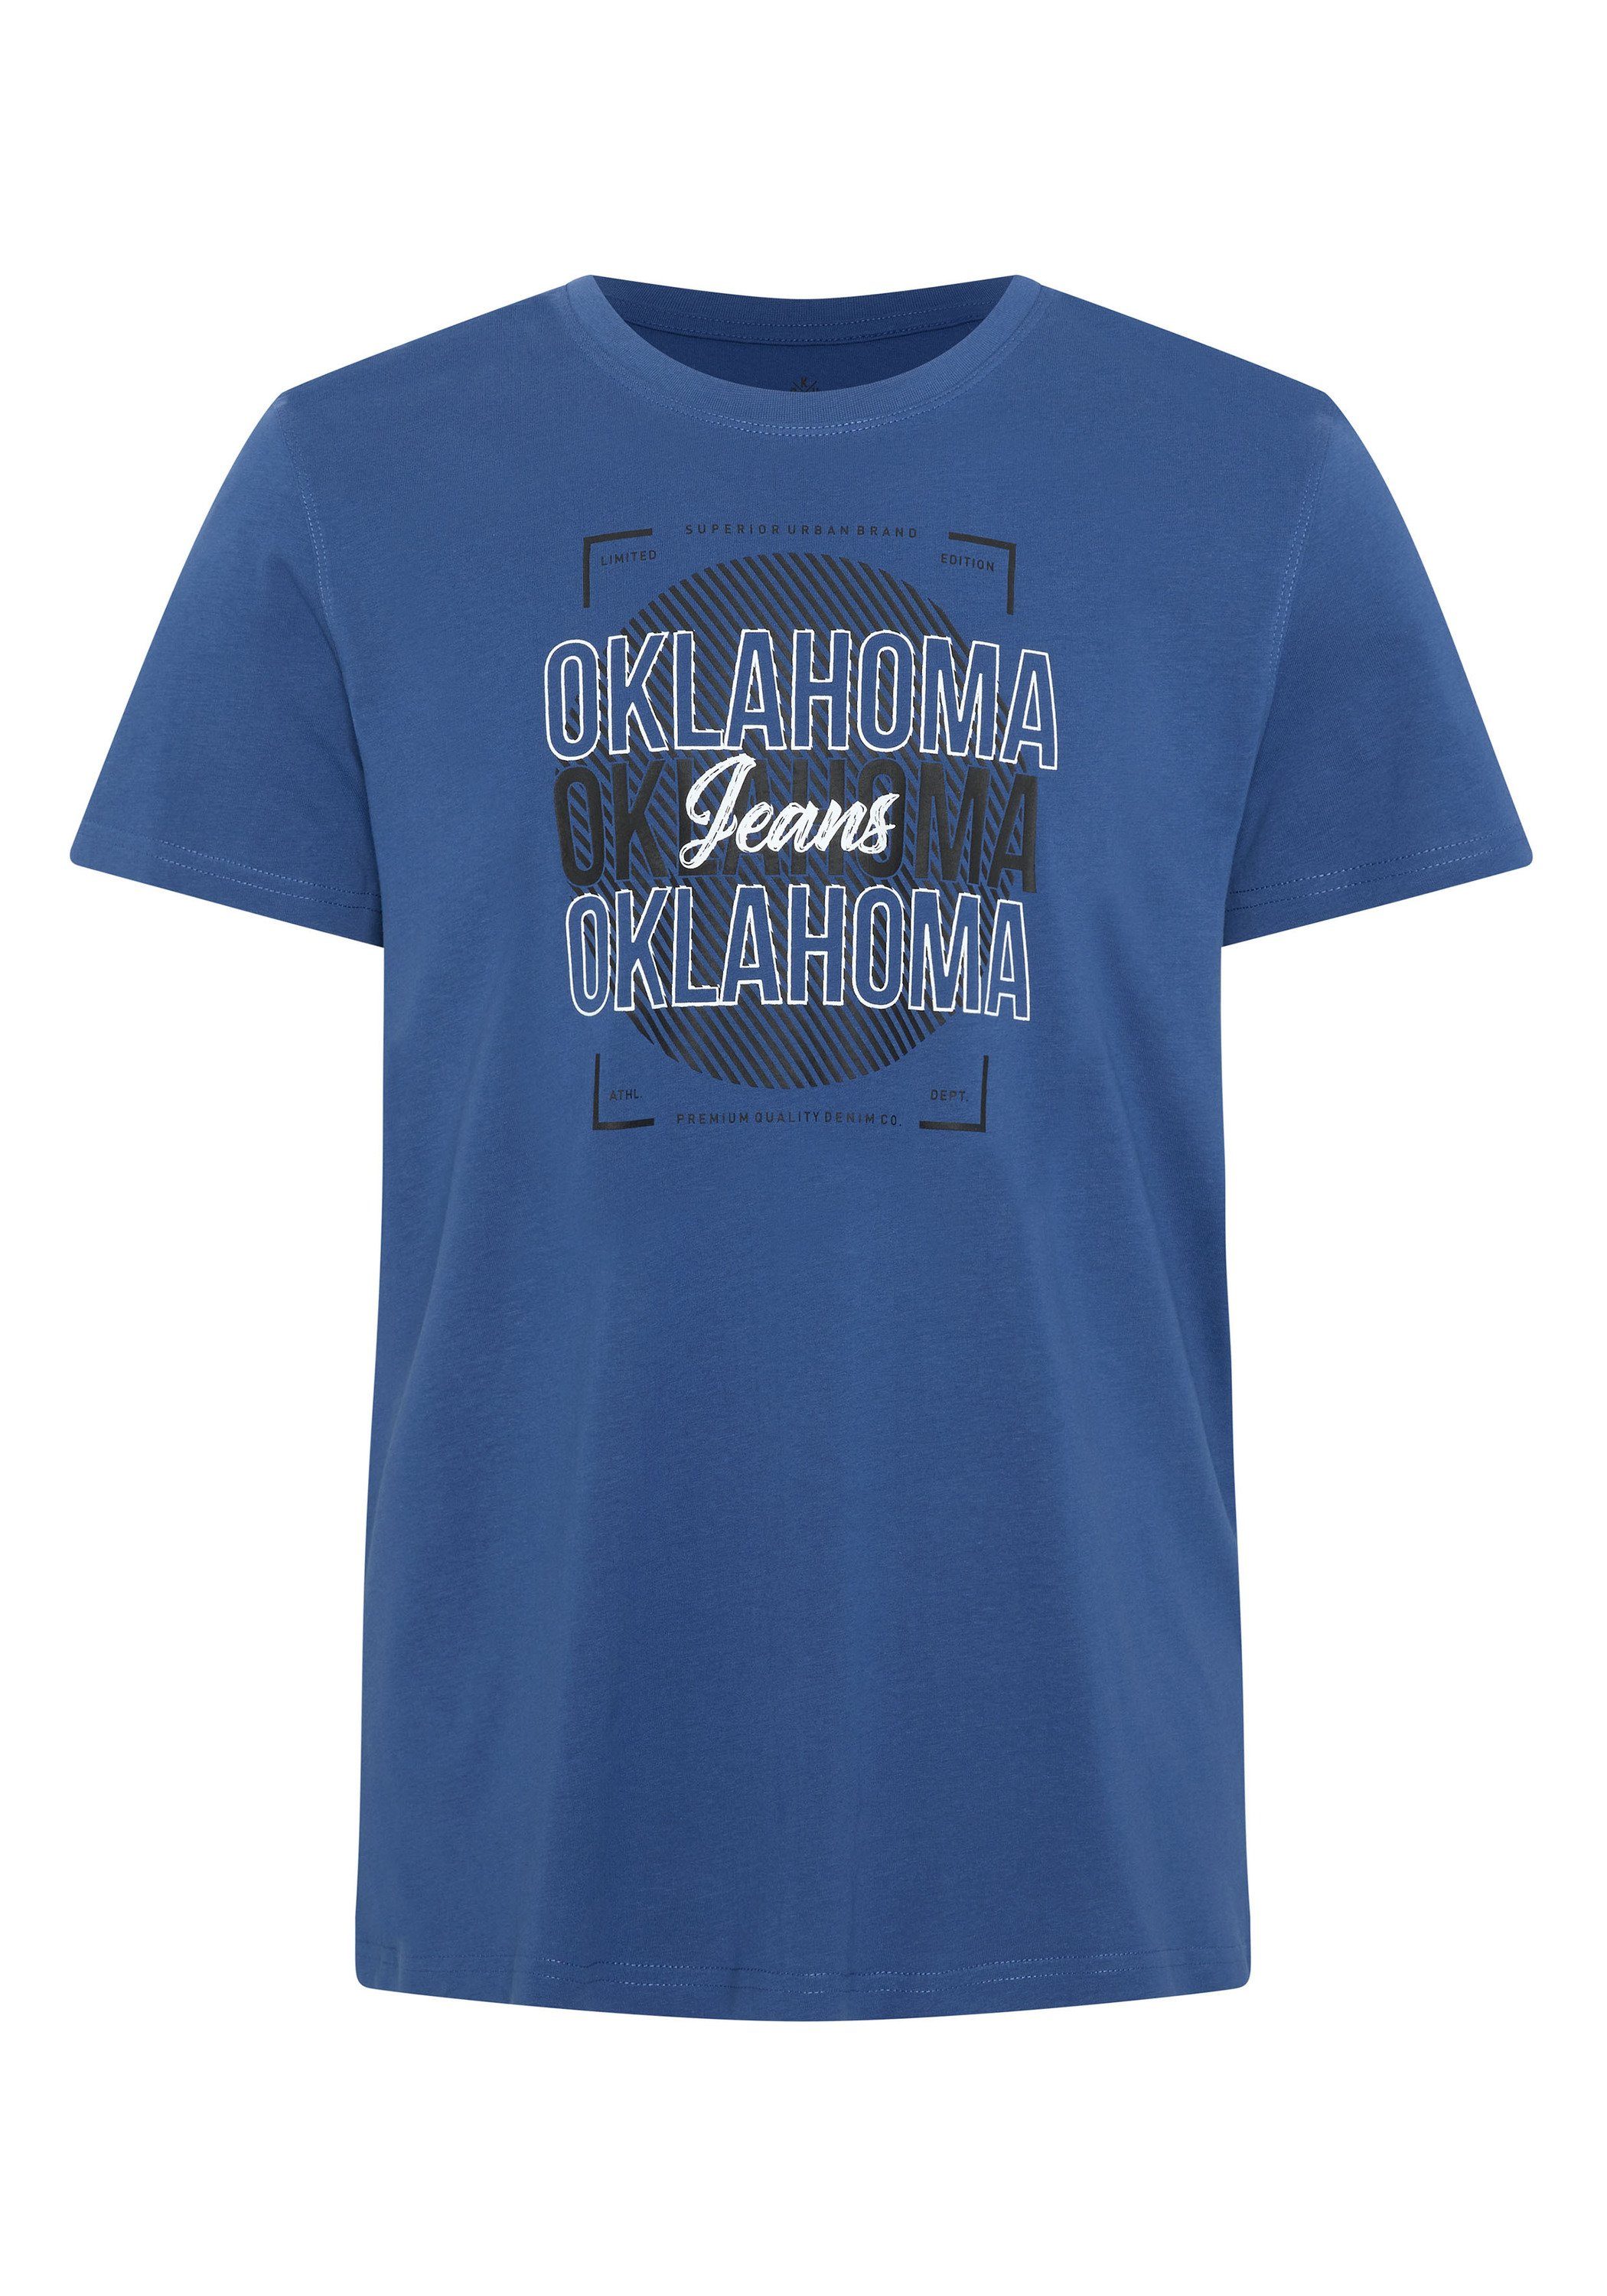 Label-Look neuen im Print-Shirt 19-4042 Sail Oklahoma Set Jeans